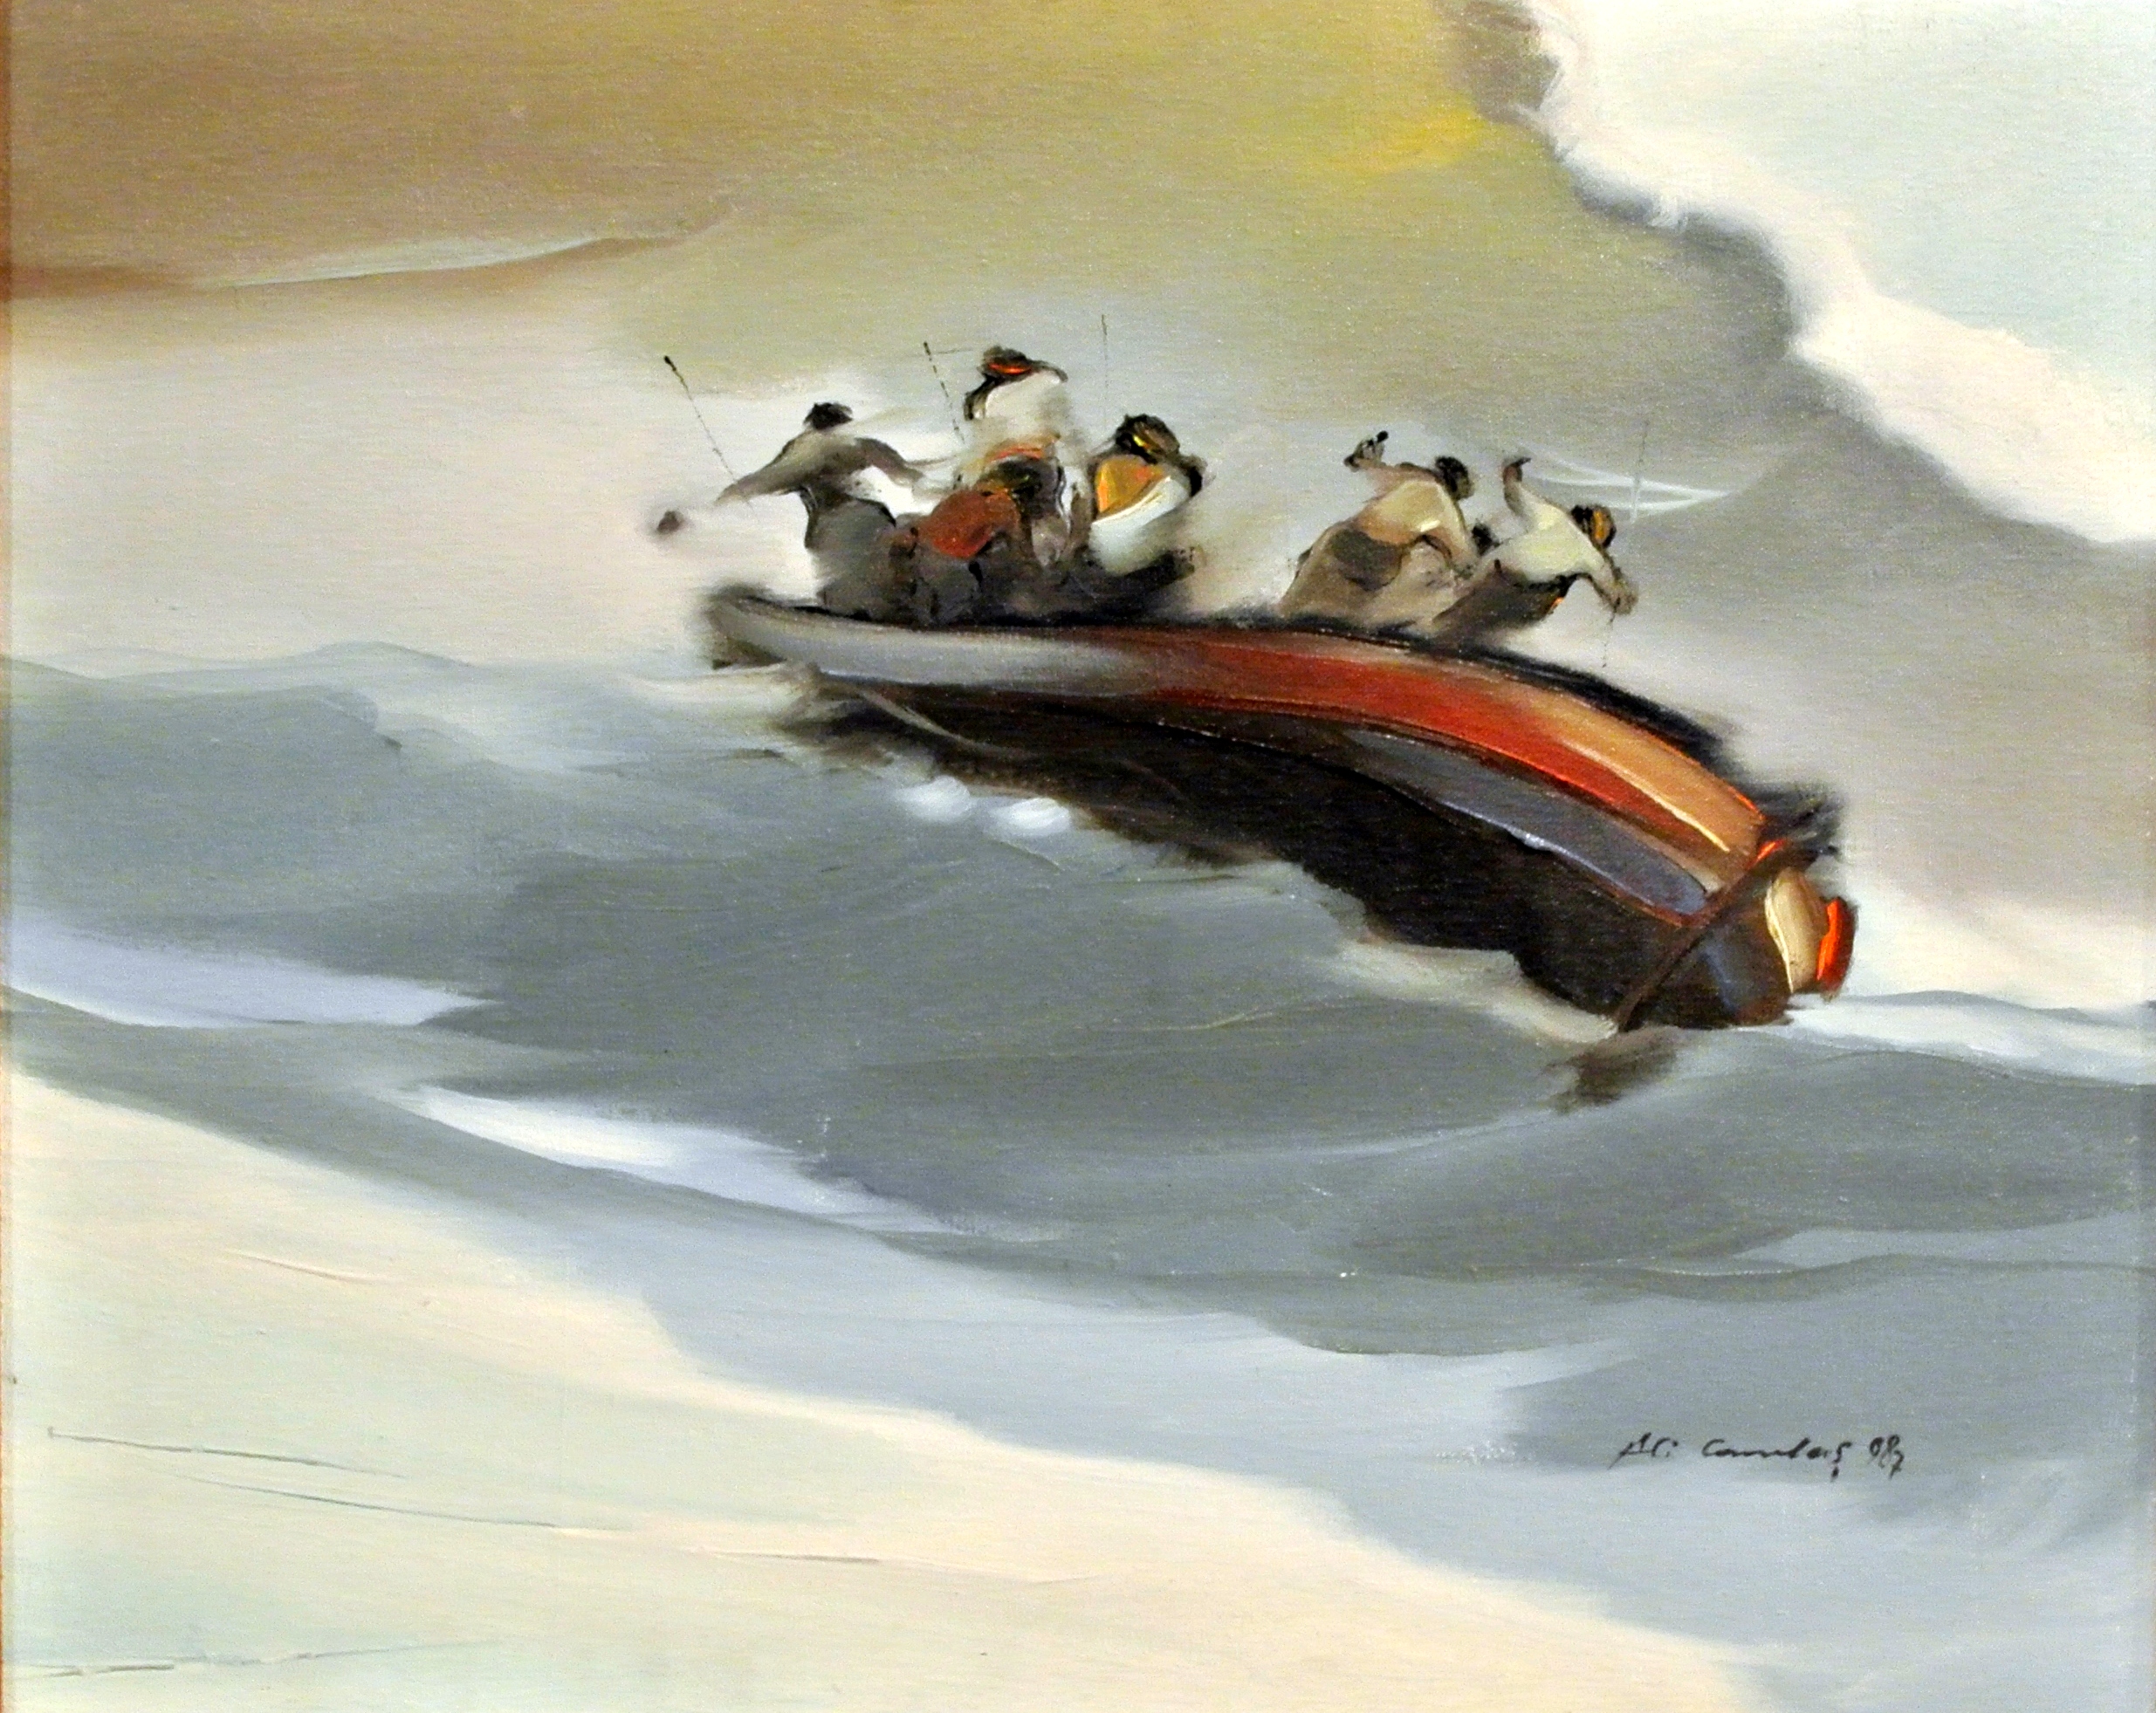 ALİ CANDAŞ, İsimsiz- Untitled, 1987, Tuval üzerine yağlıboya- Oil on canvas, 45x55 cm